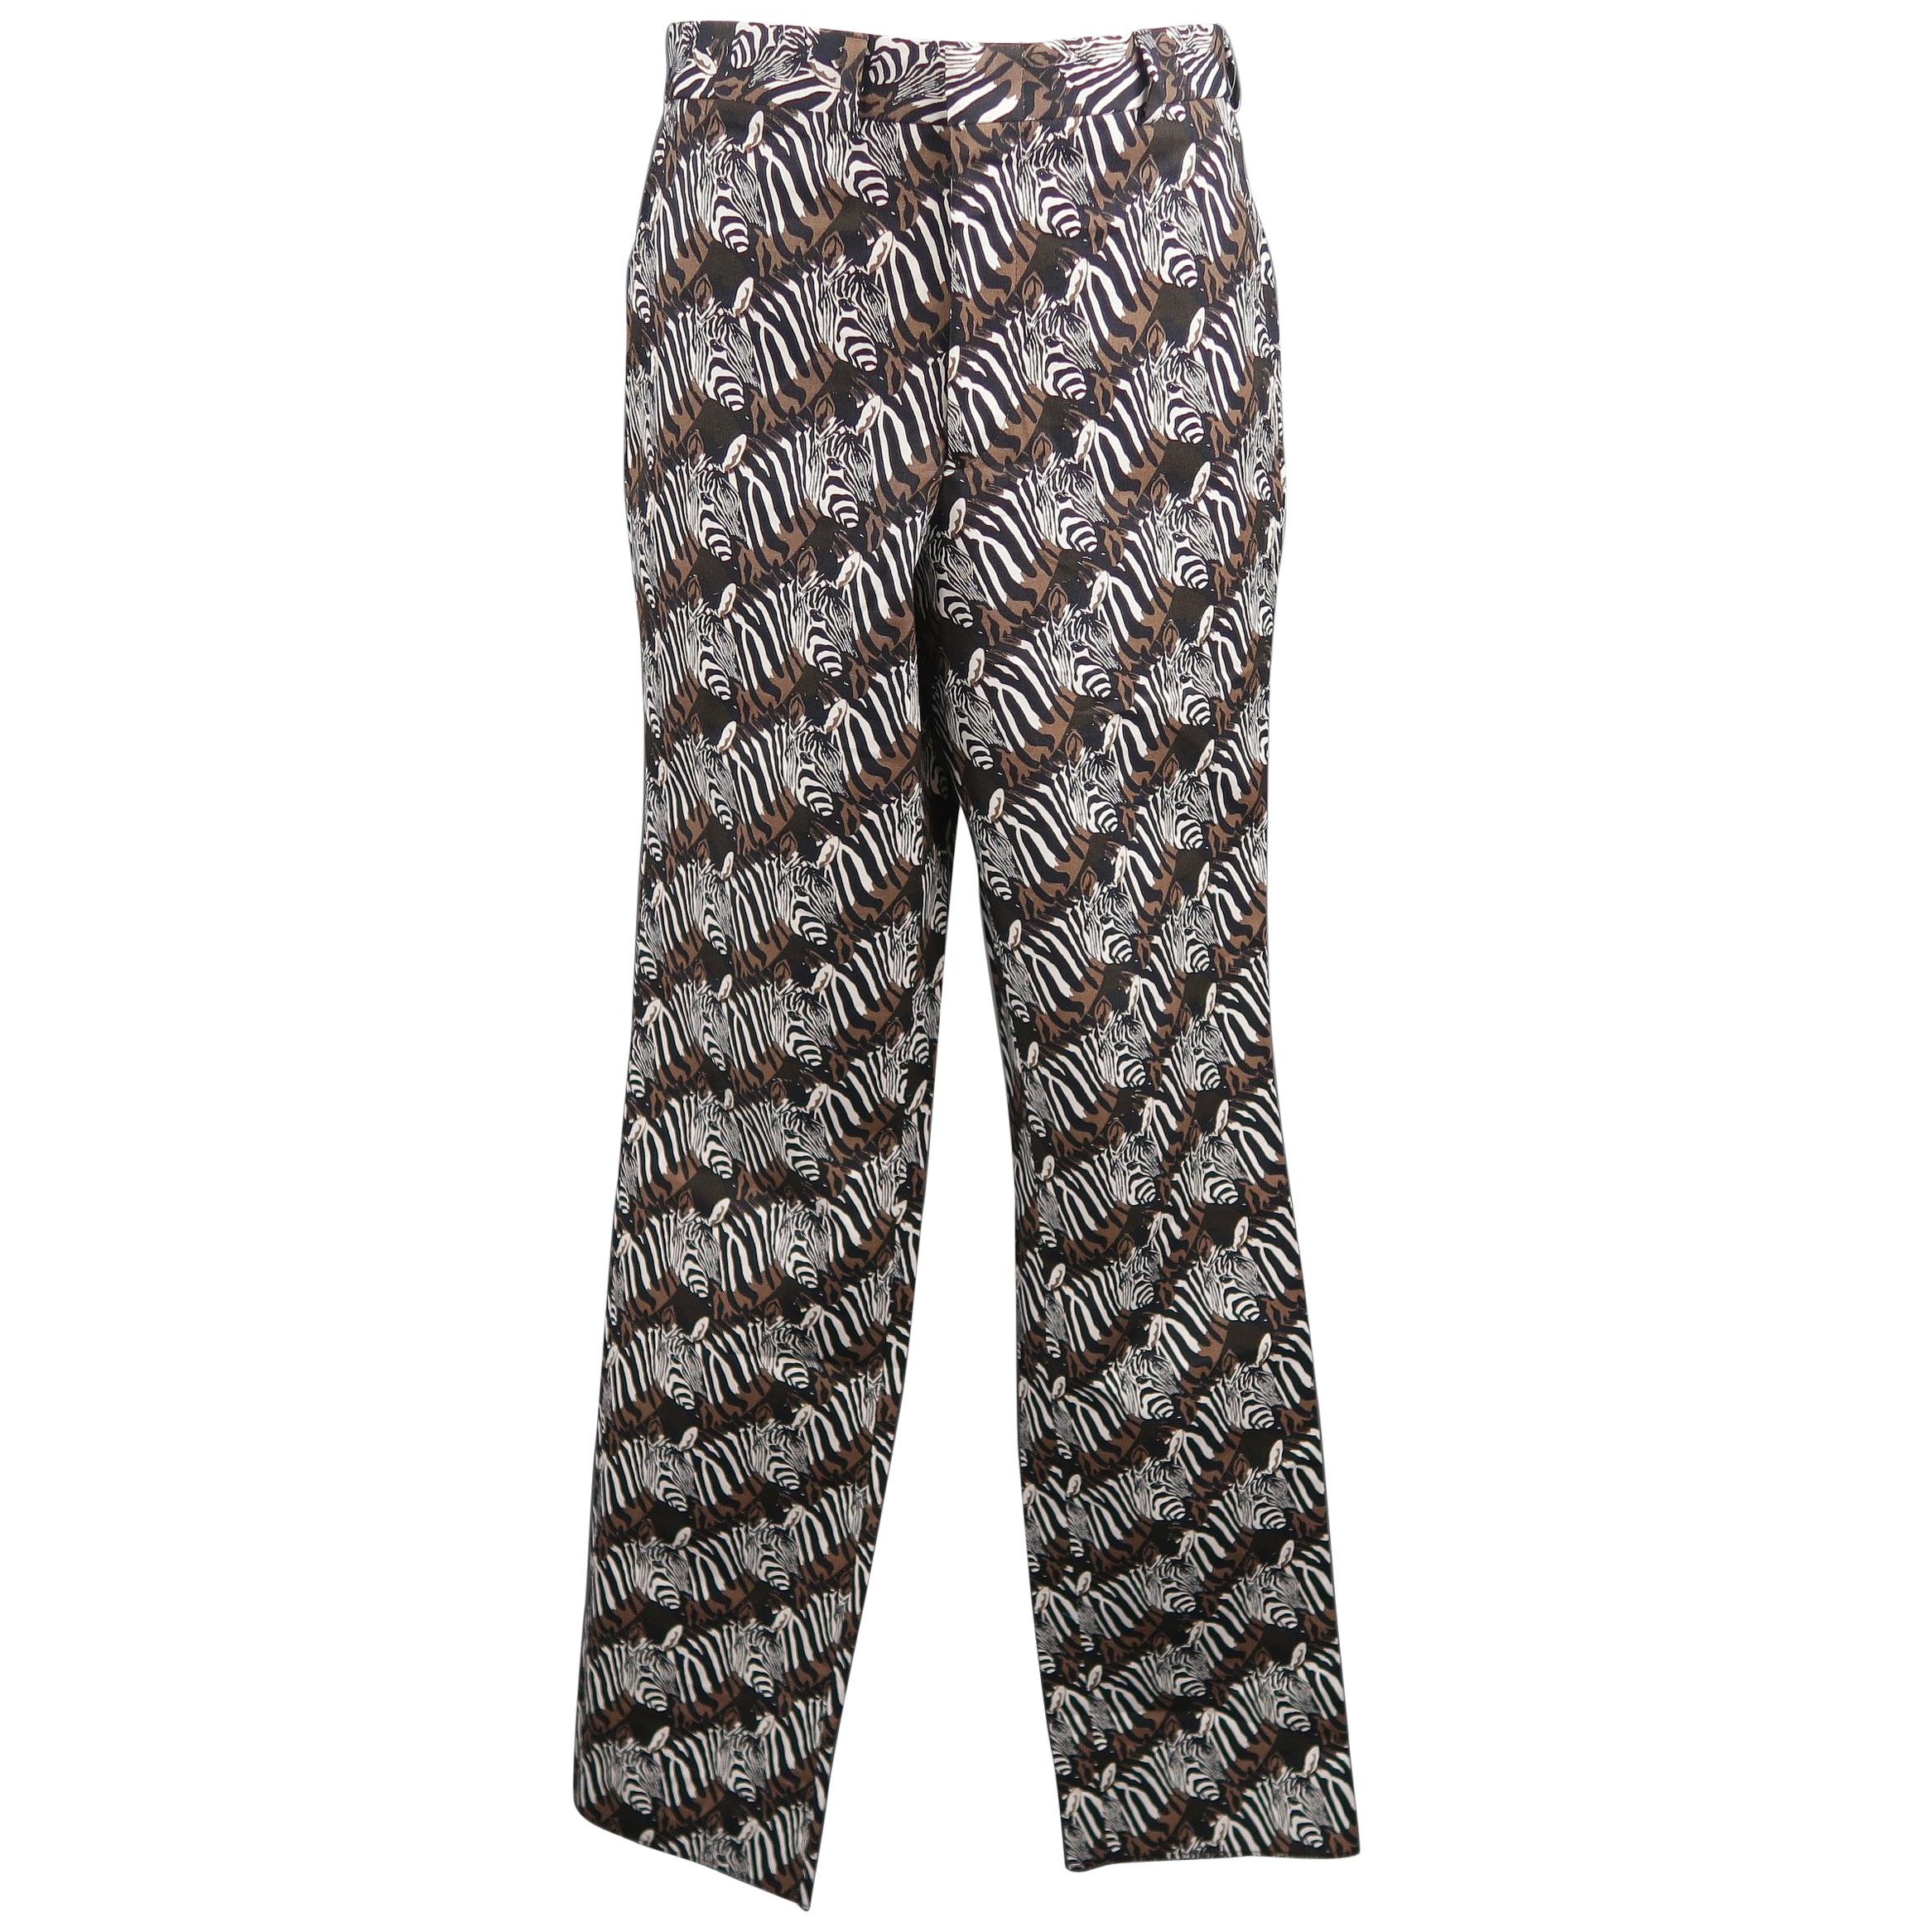  Gitman Vintage Brown Zebras Graphic Print Cotton Casual Pants